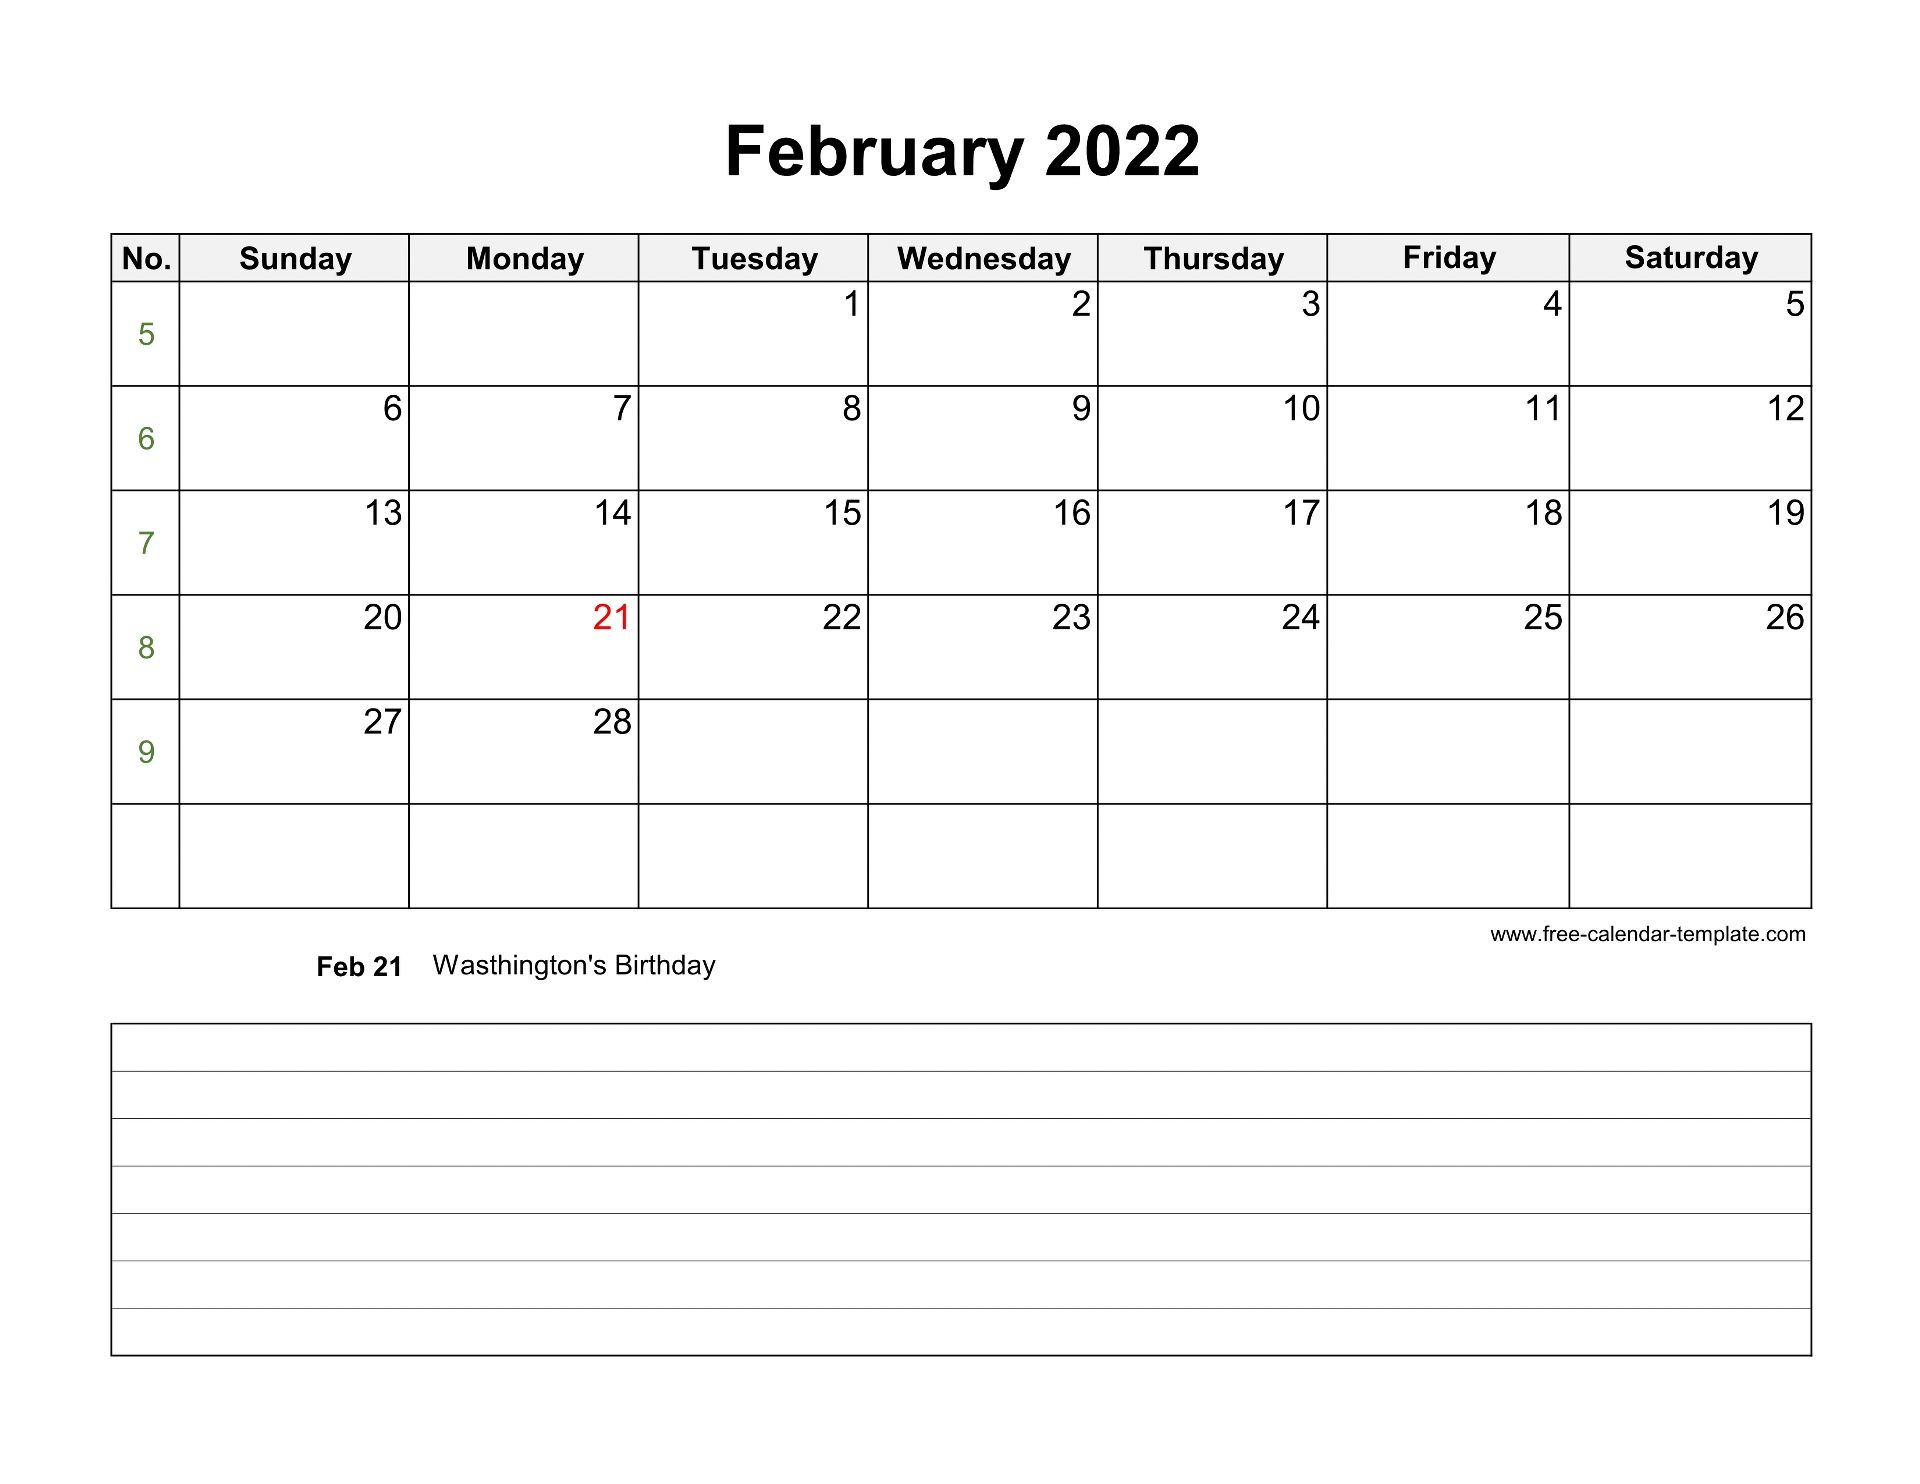 February 2022 Free Calendar Tempplate Free Calendar 1